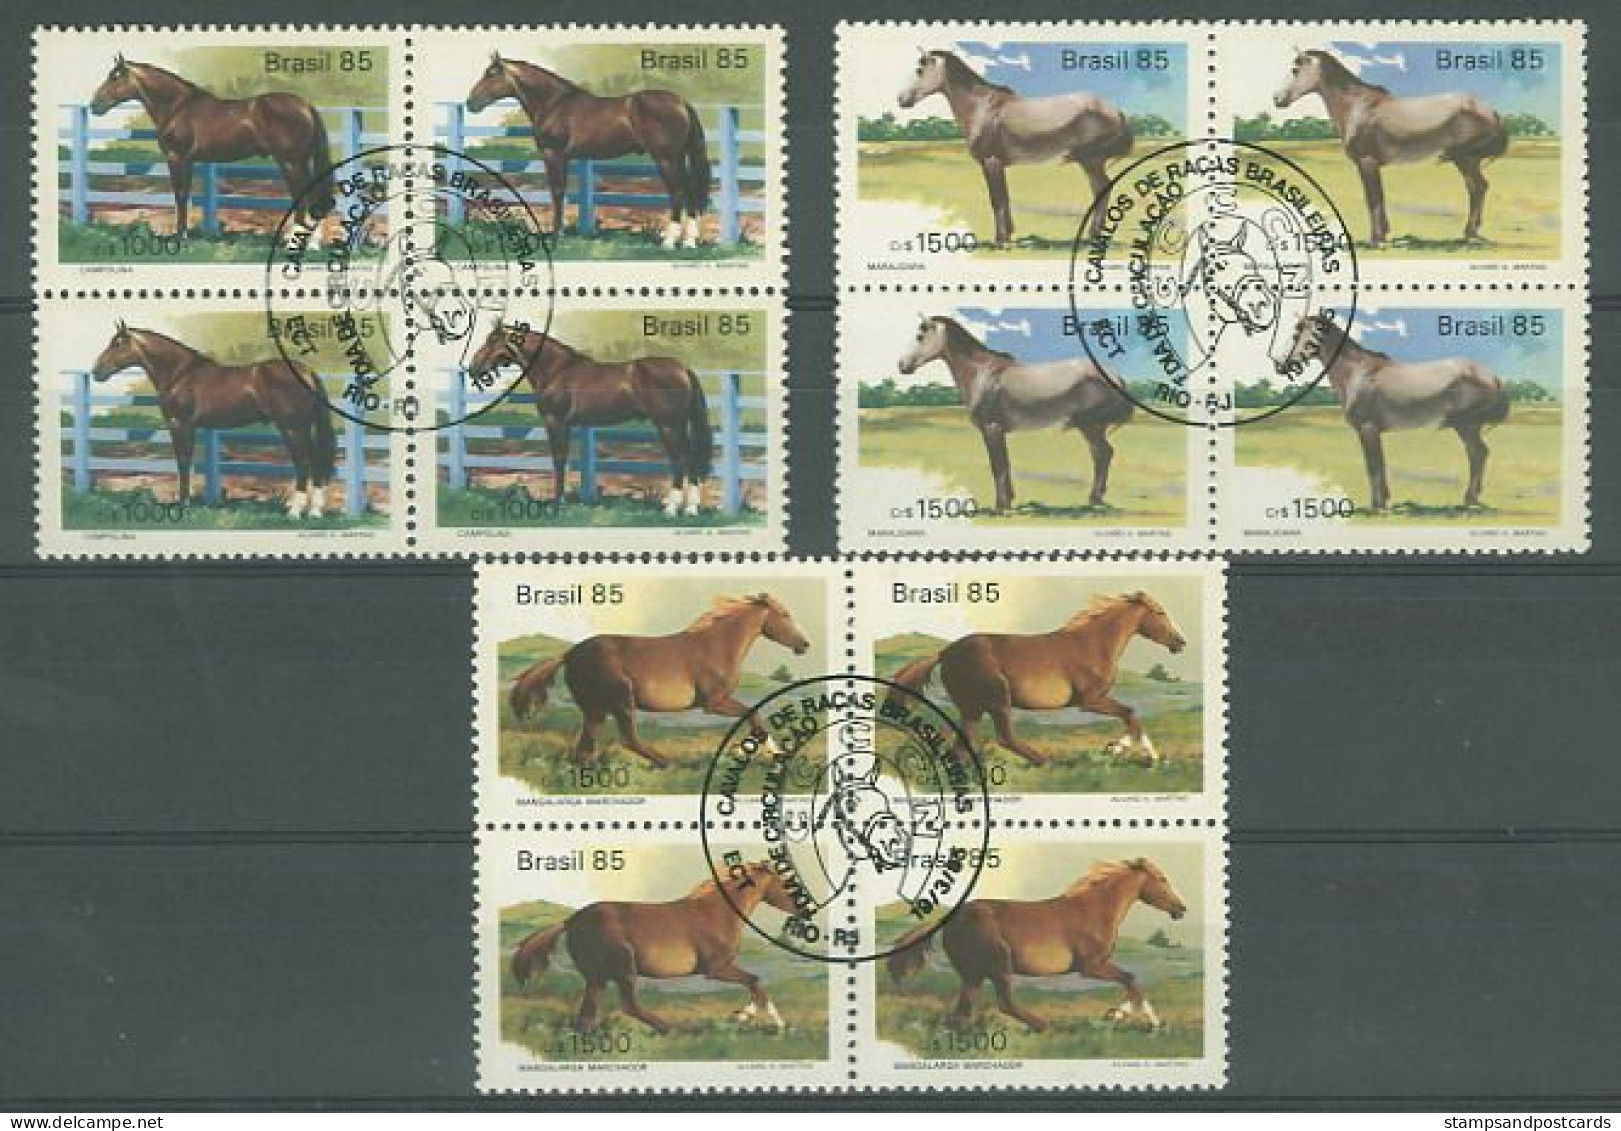 Brèsil Brasil 1985 Chevaux Cheval X 4 Avec Cachet Premier Jour Brazil Horses Horse X 4 With First Day Postmark - Chevaux